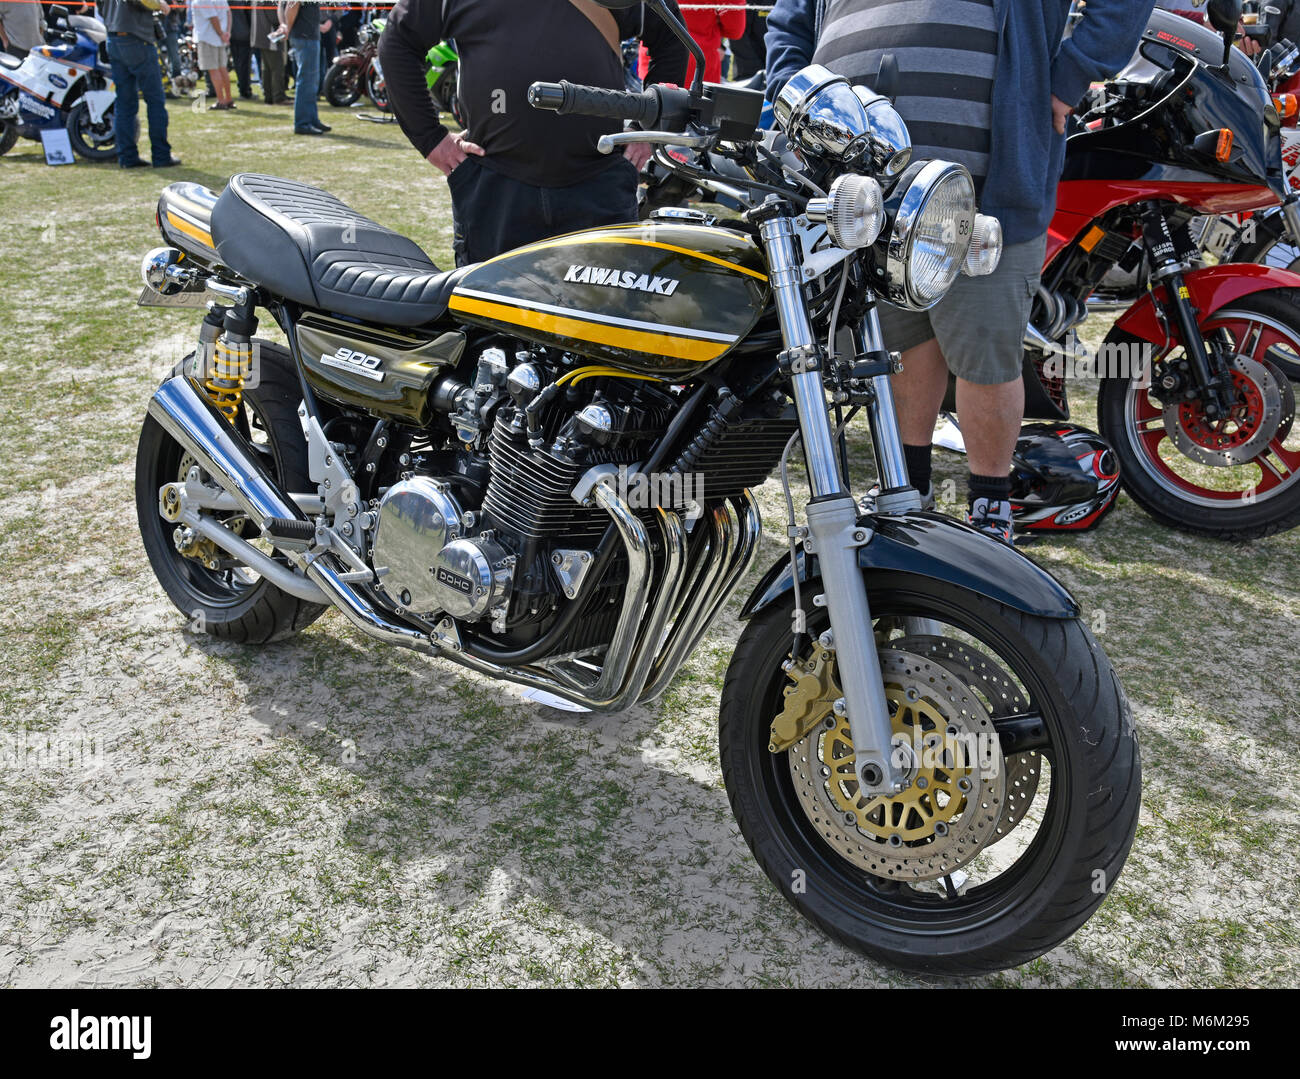 customized z900 kawasaki motorcycle at bike show Stock Photo - Alamy